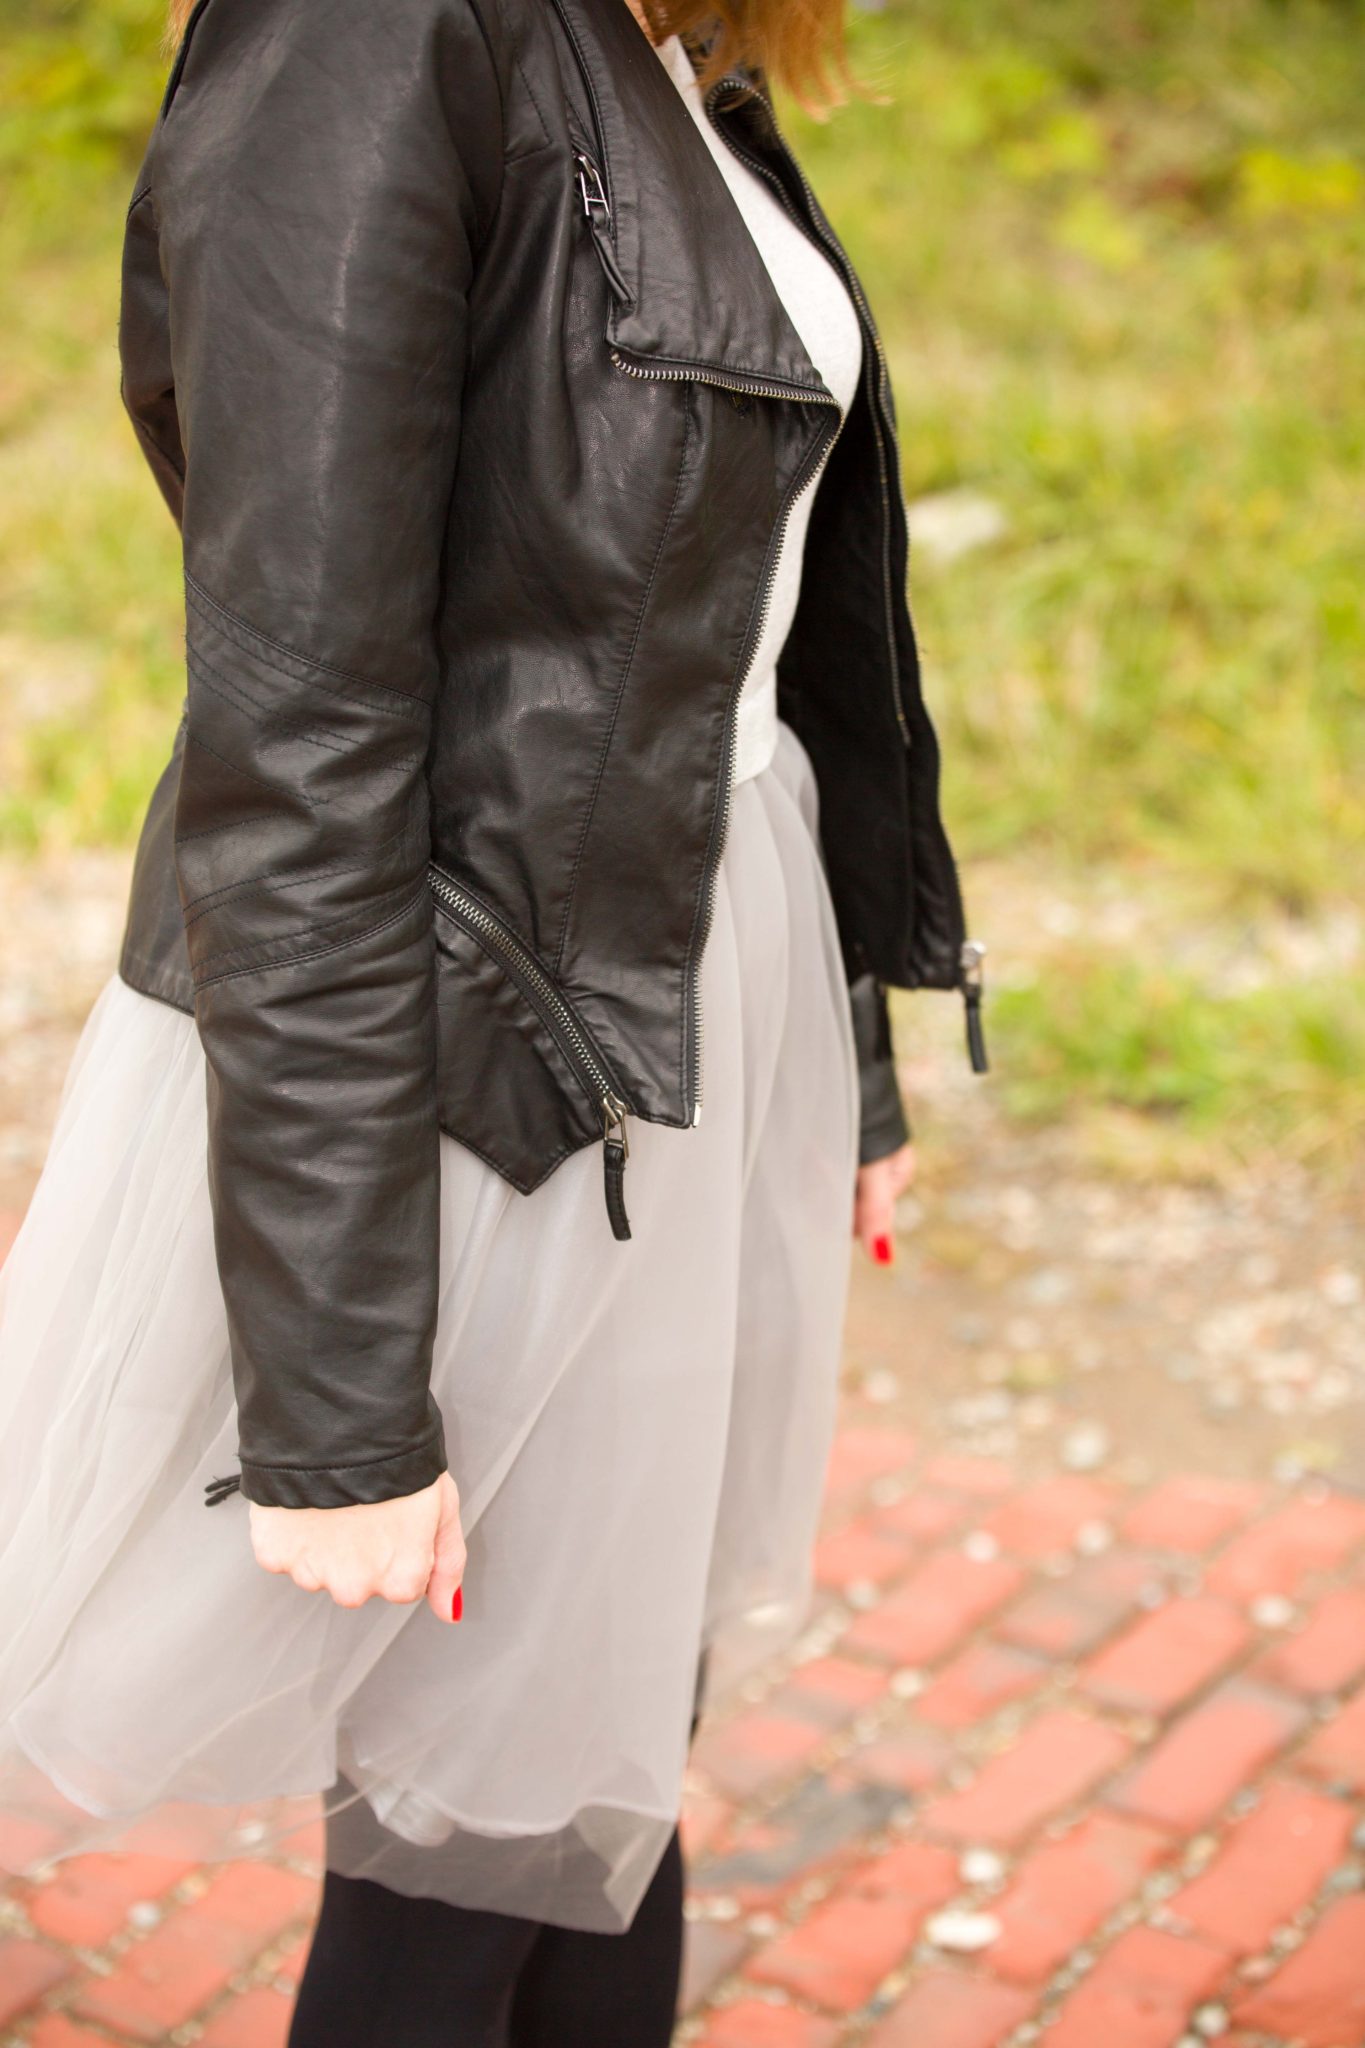 gray monroe jordan dress | women's tutu dress | how to pair a fancy dress with a leather moto jacket | edgy chic look on allweareblog.com